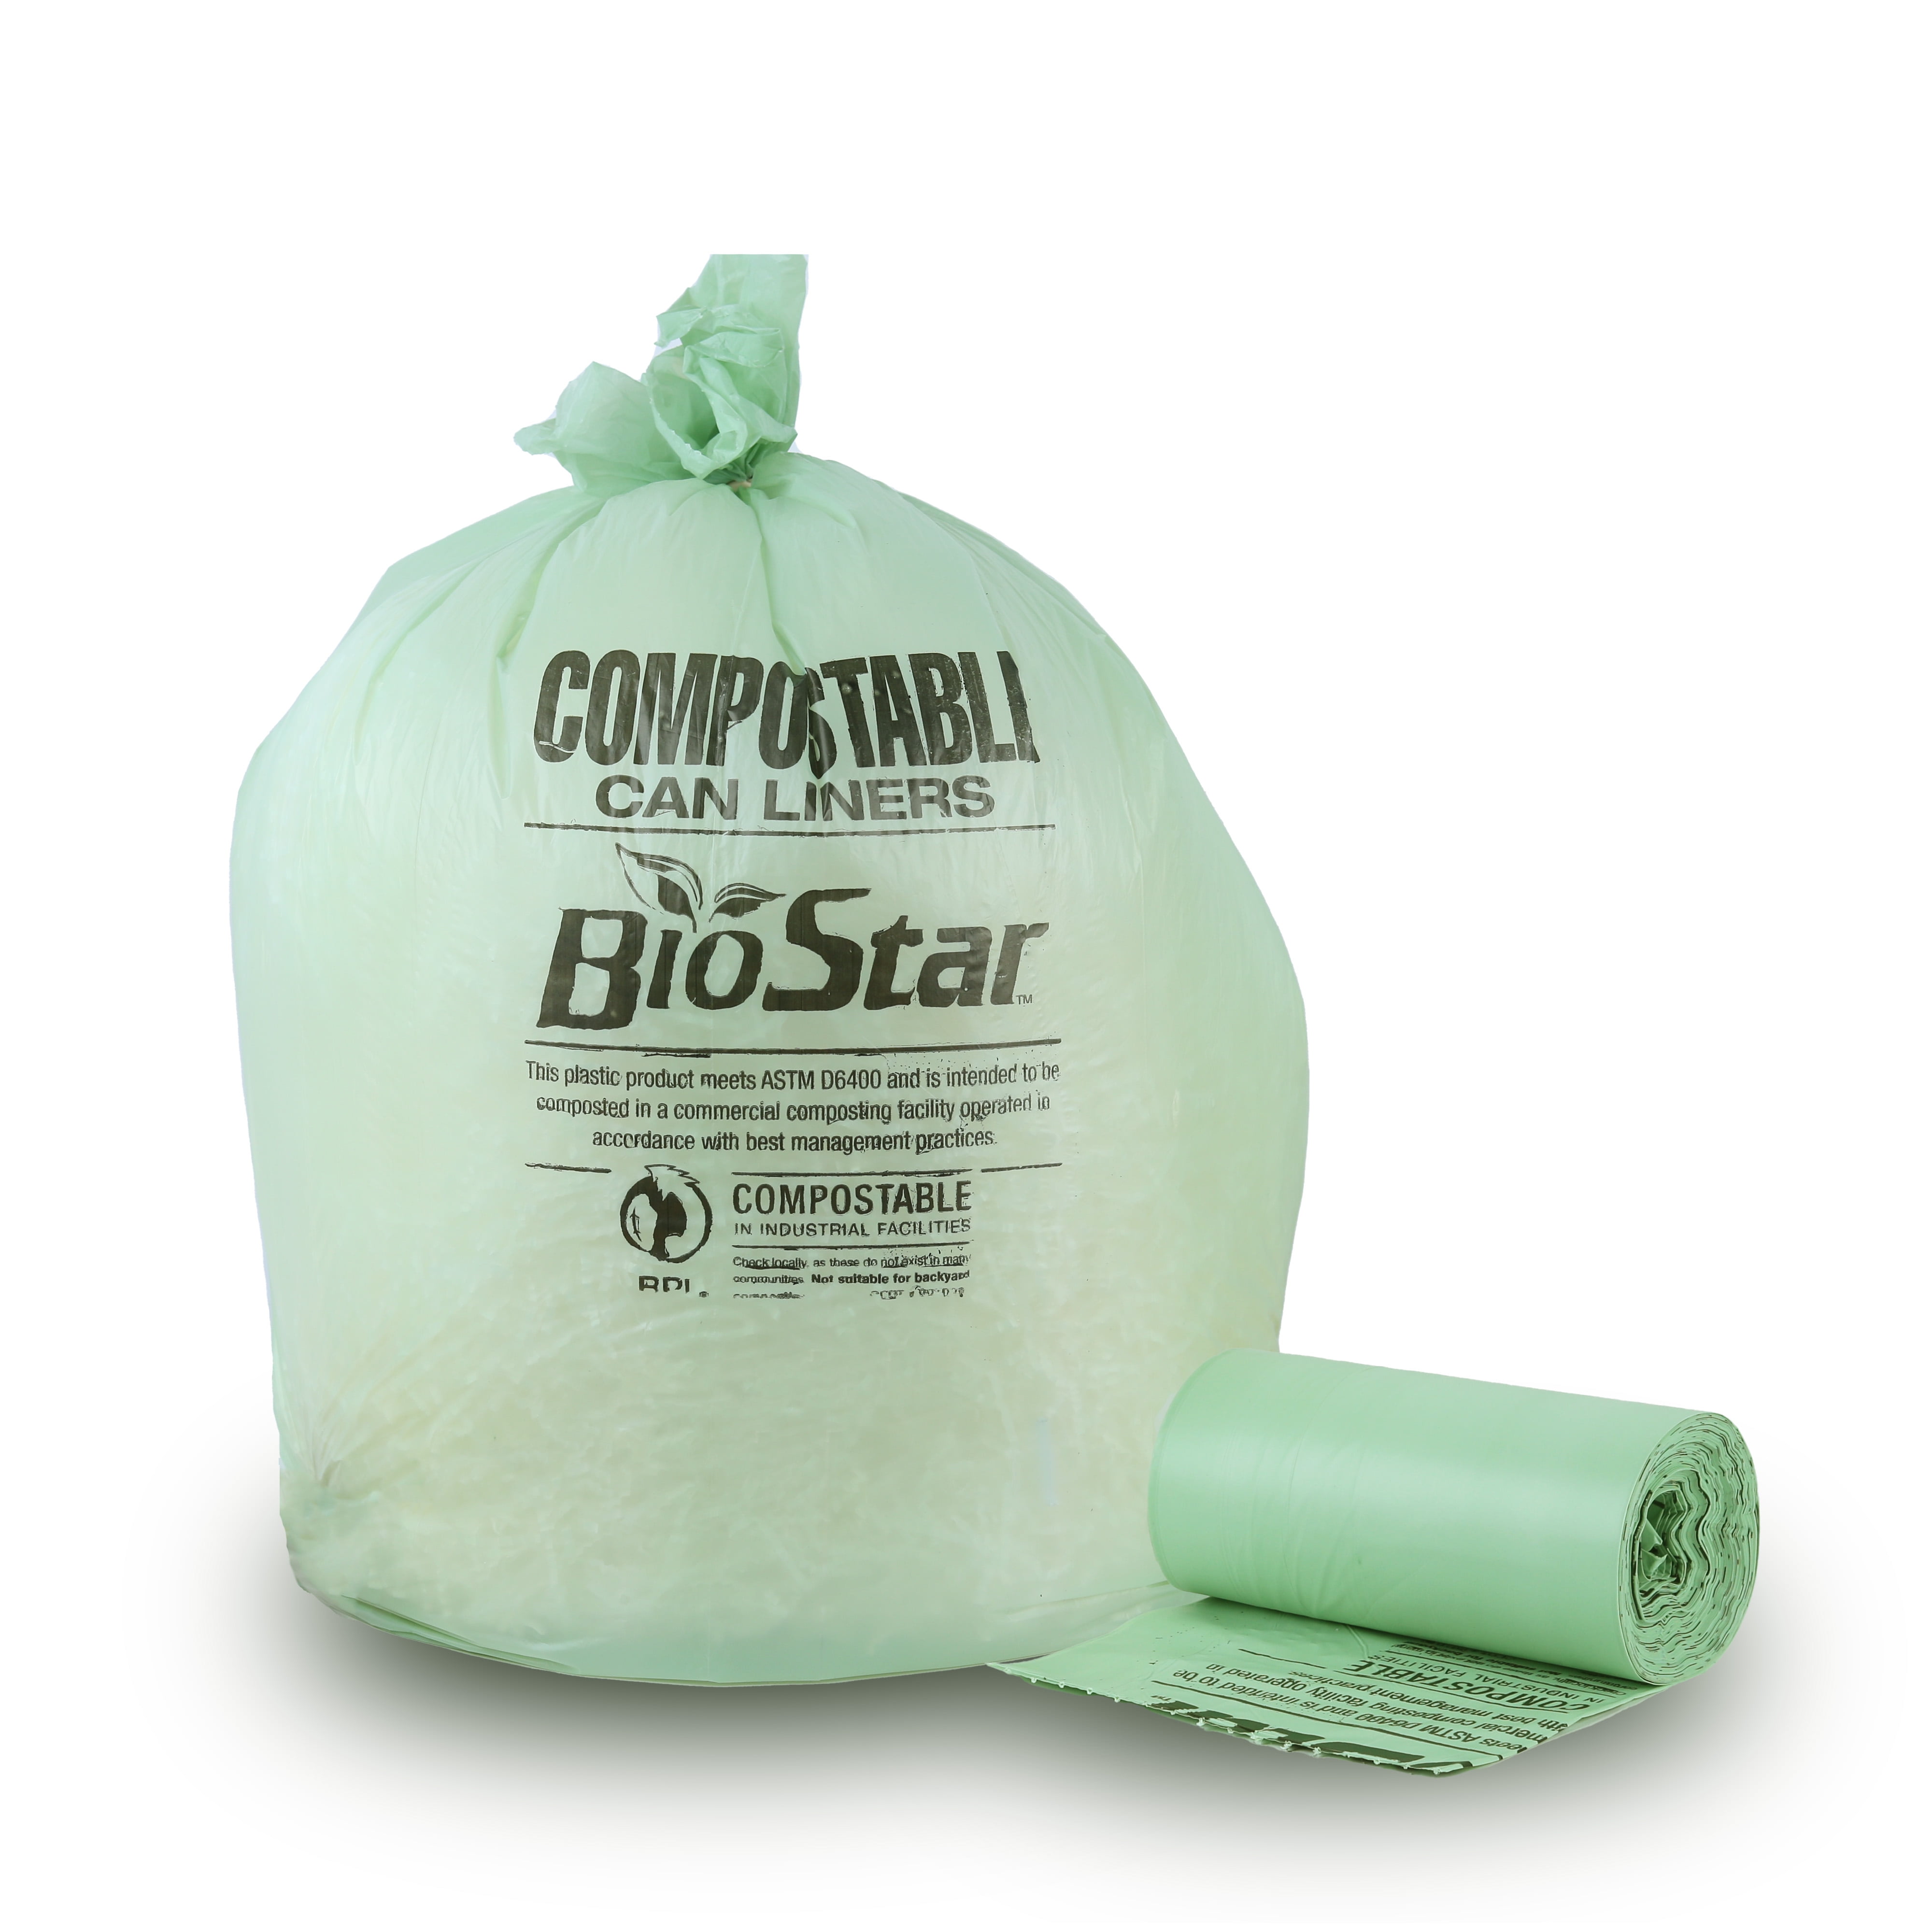 C Crystal Lemon 50 Counts Compostable Trash Bags, 6 Gallon Heavy